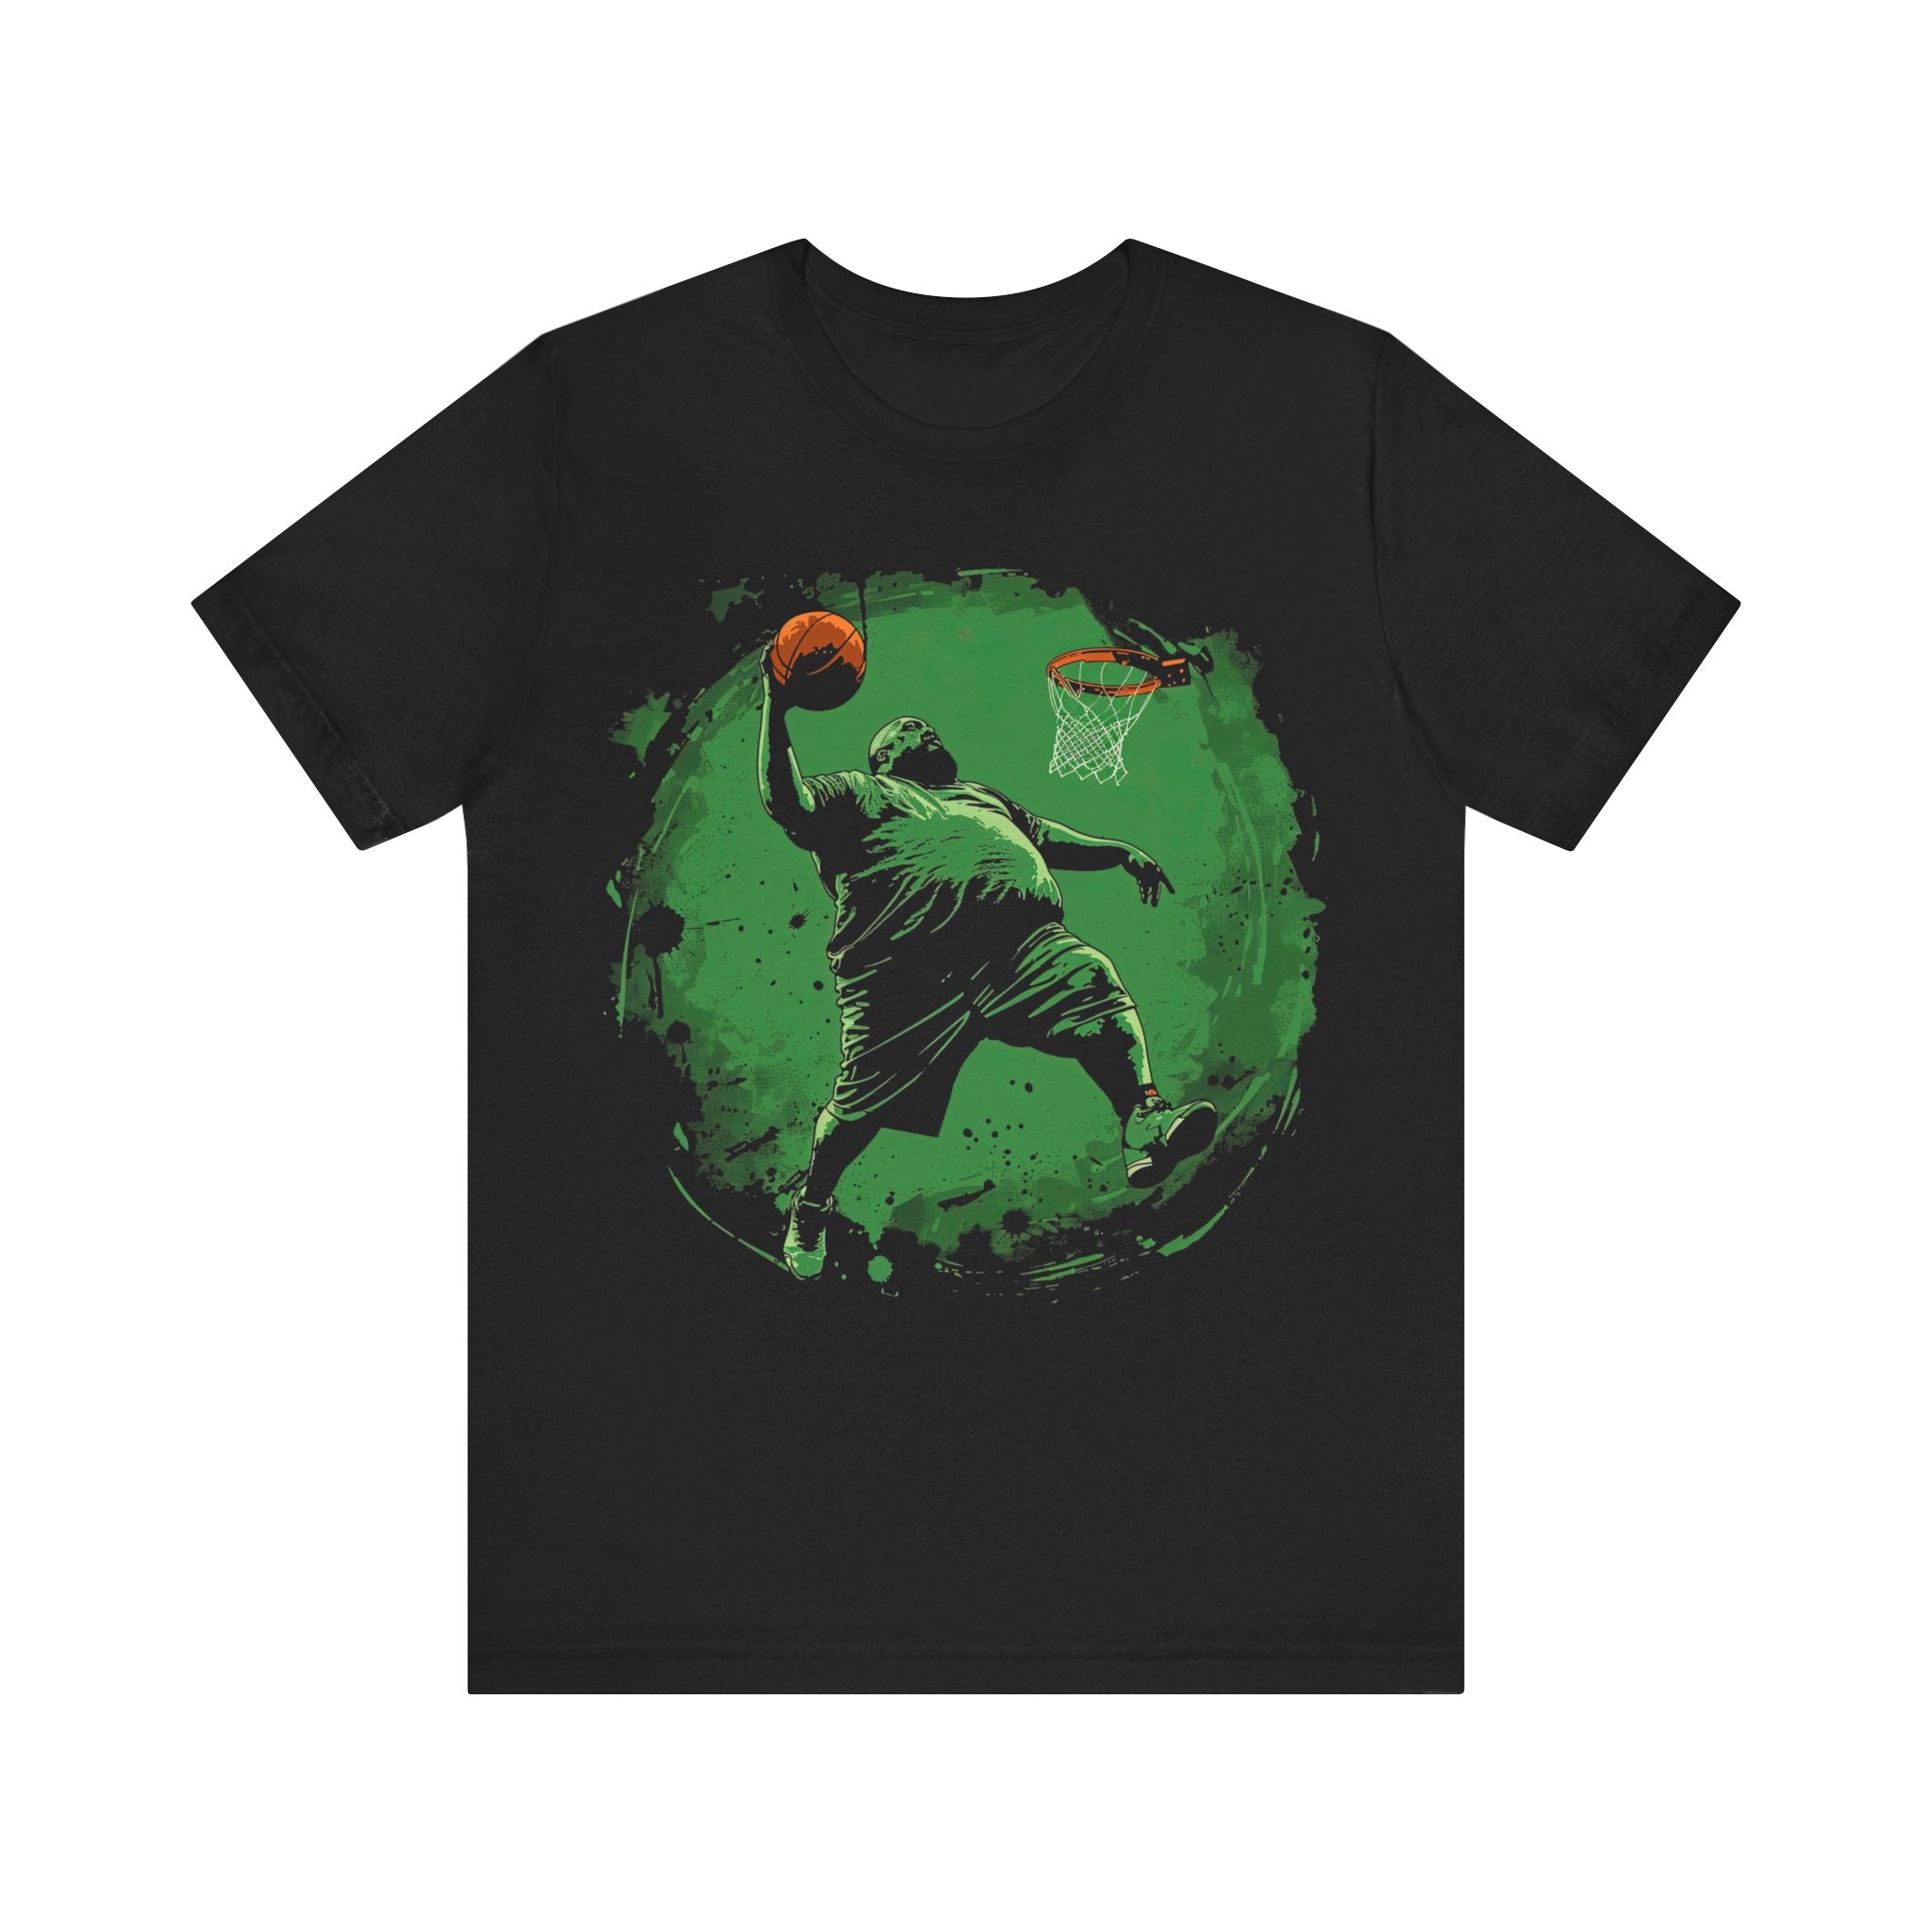 Green FN Slam Dunk T-Shirt, Ironic Perfect Shot Graphic Tee, Viral Meme-Inspired Sports Apparel, Eye-Catching Green Splash Design